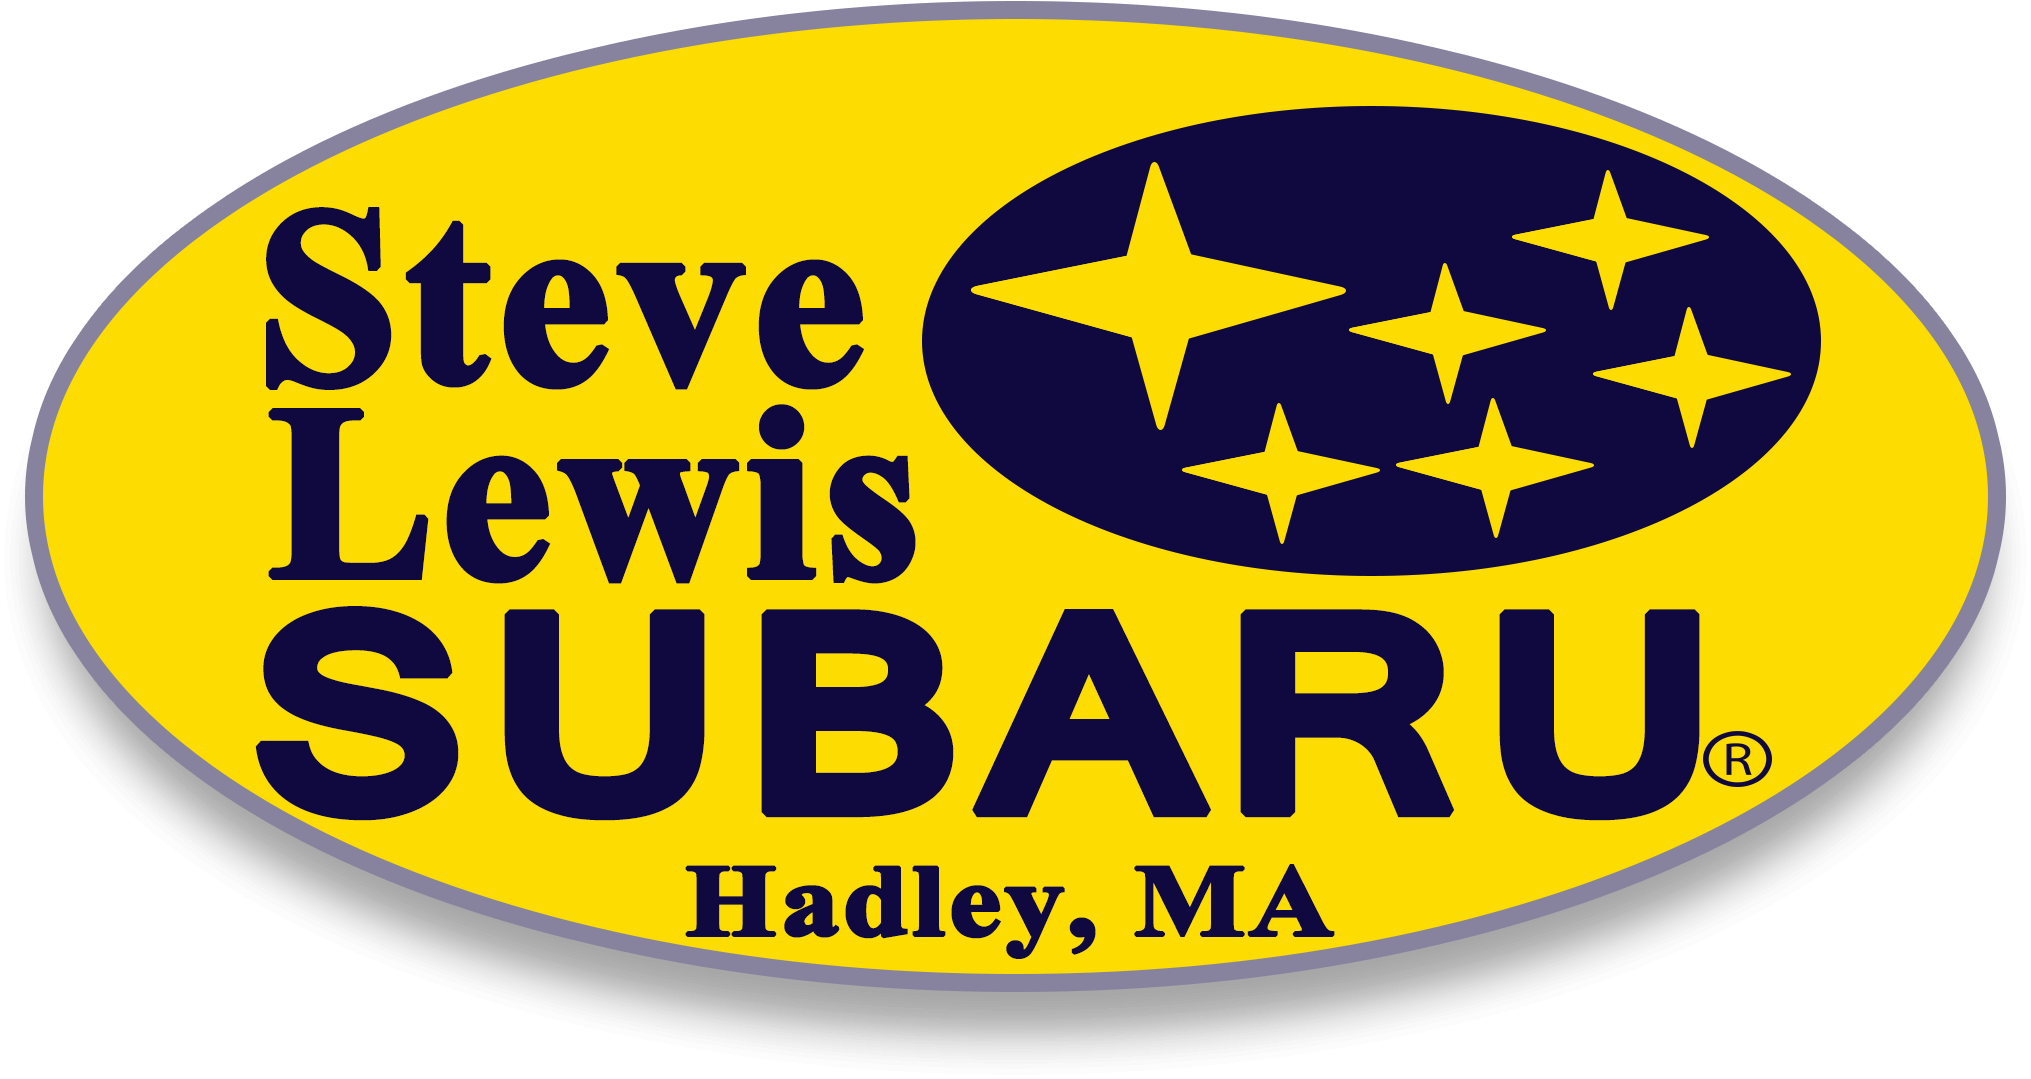 Steve Lewis Subaru Bib Sponsor